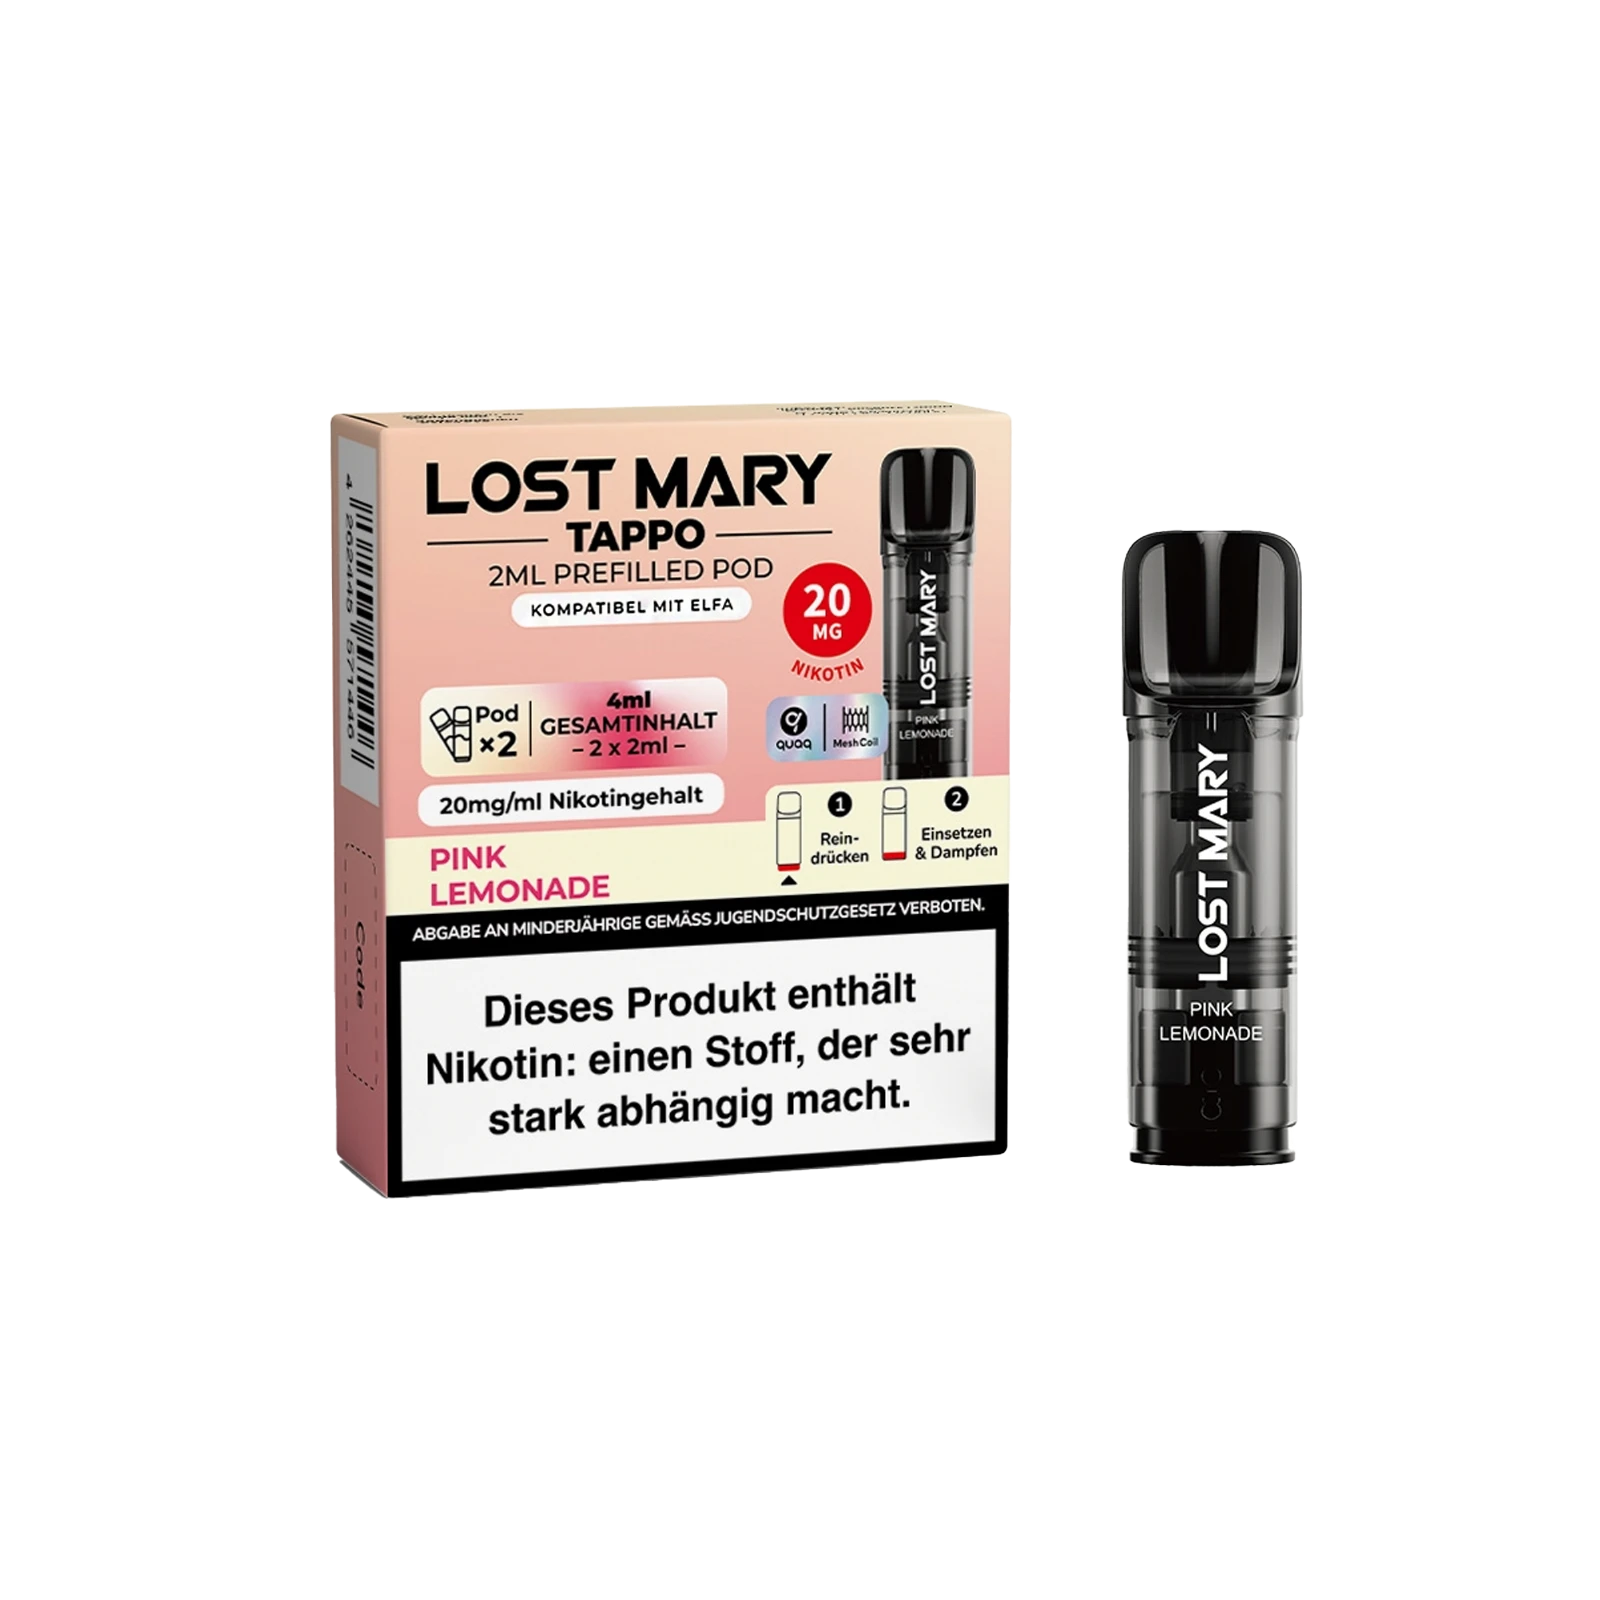 Lost Mary Tappo Pink Lemonade: Umweltfreundliches Pod-System mit Prefilled Pods 2